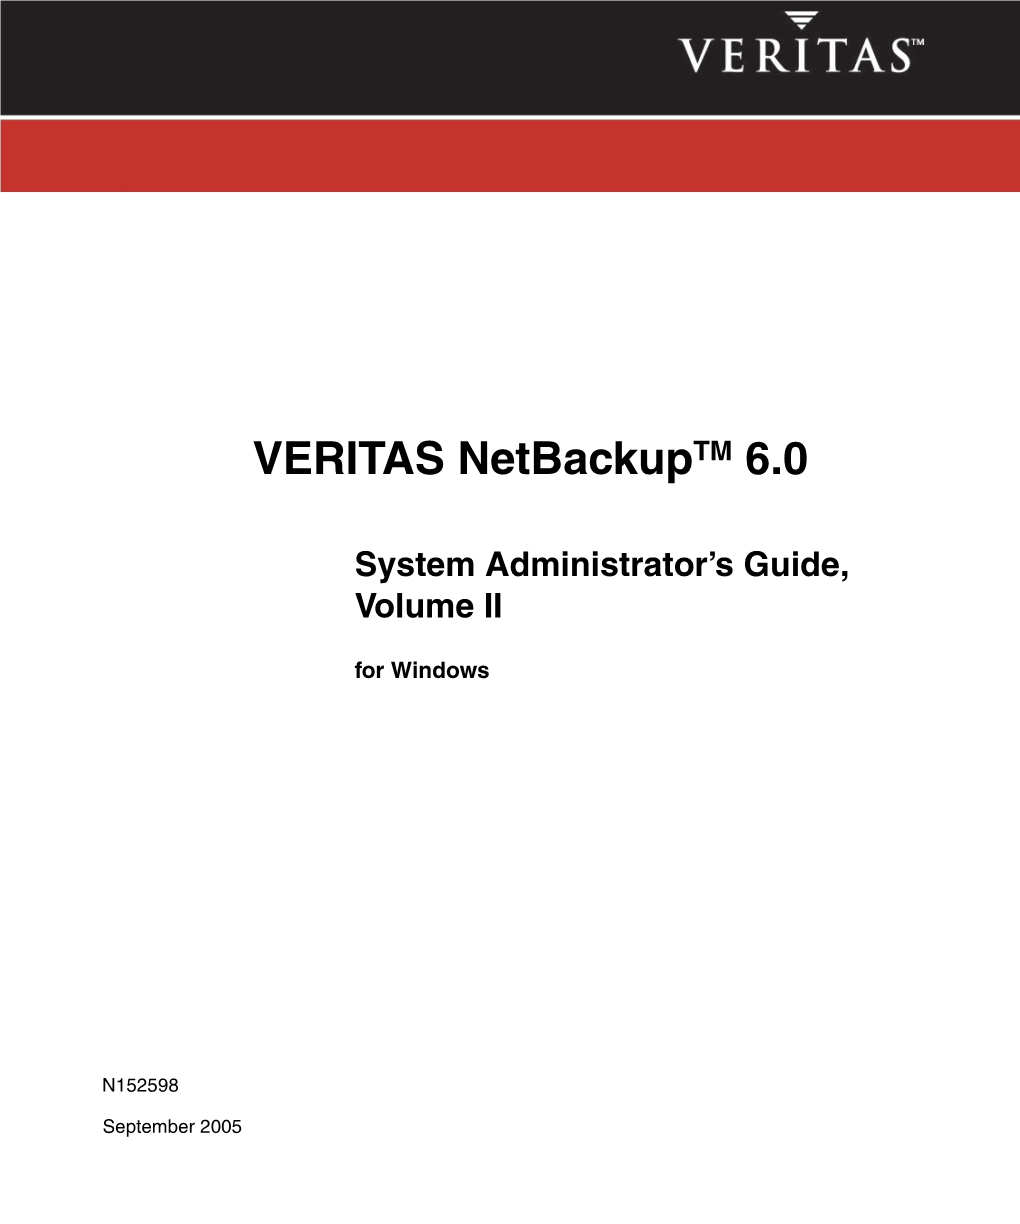 Netbackup System Administrator's Guide for Windows, Volume II